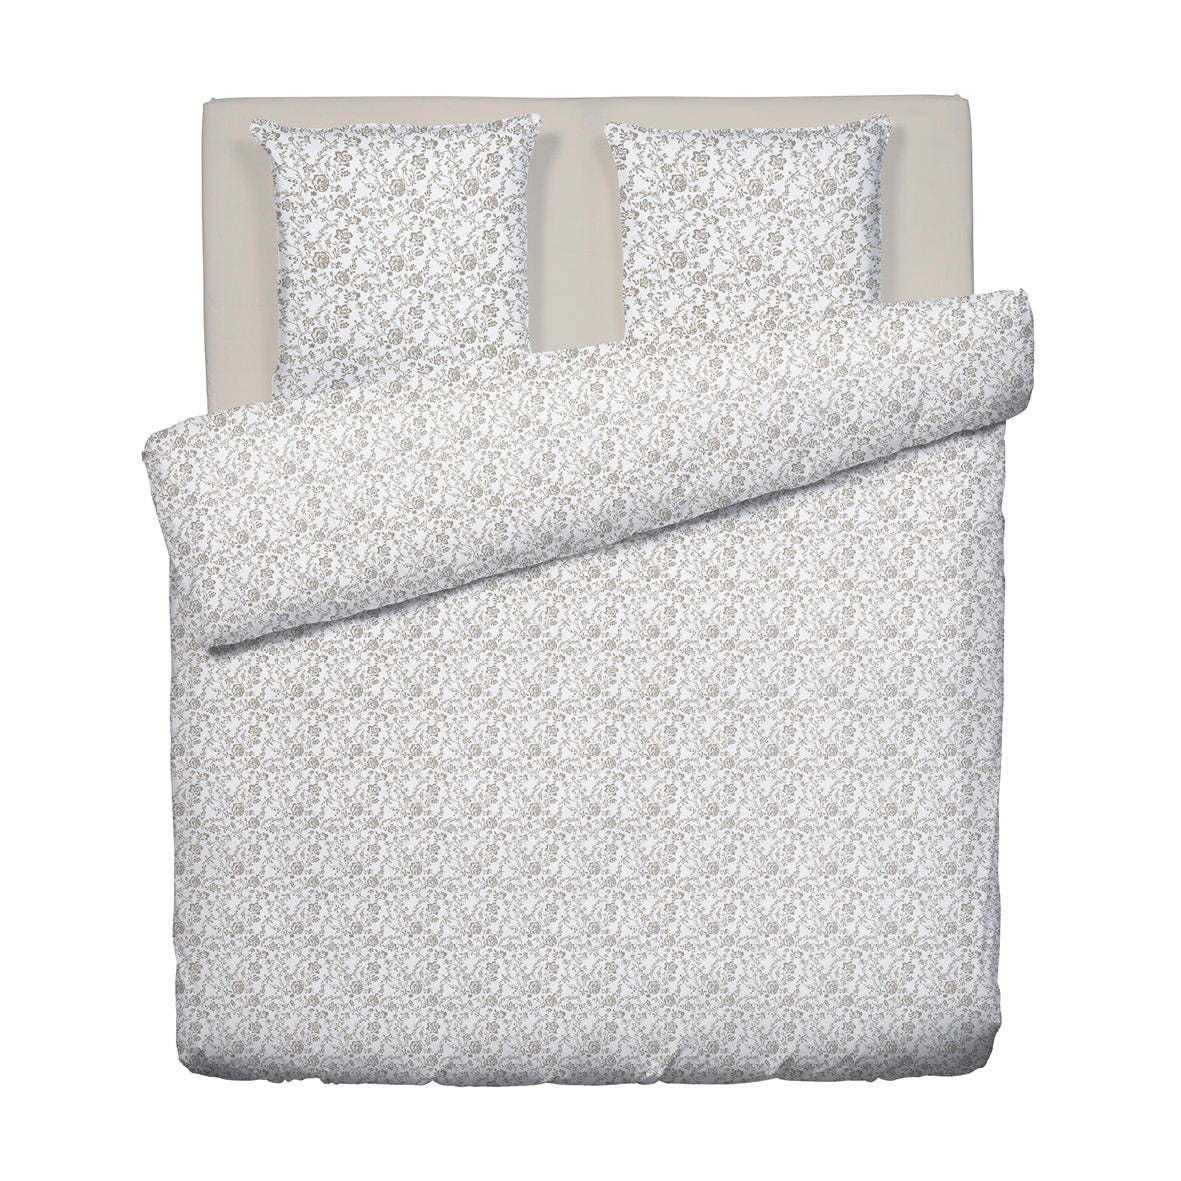 Duvet cover + pillowcase(s) cotton satin - Parterre de Roses white/taupe